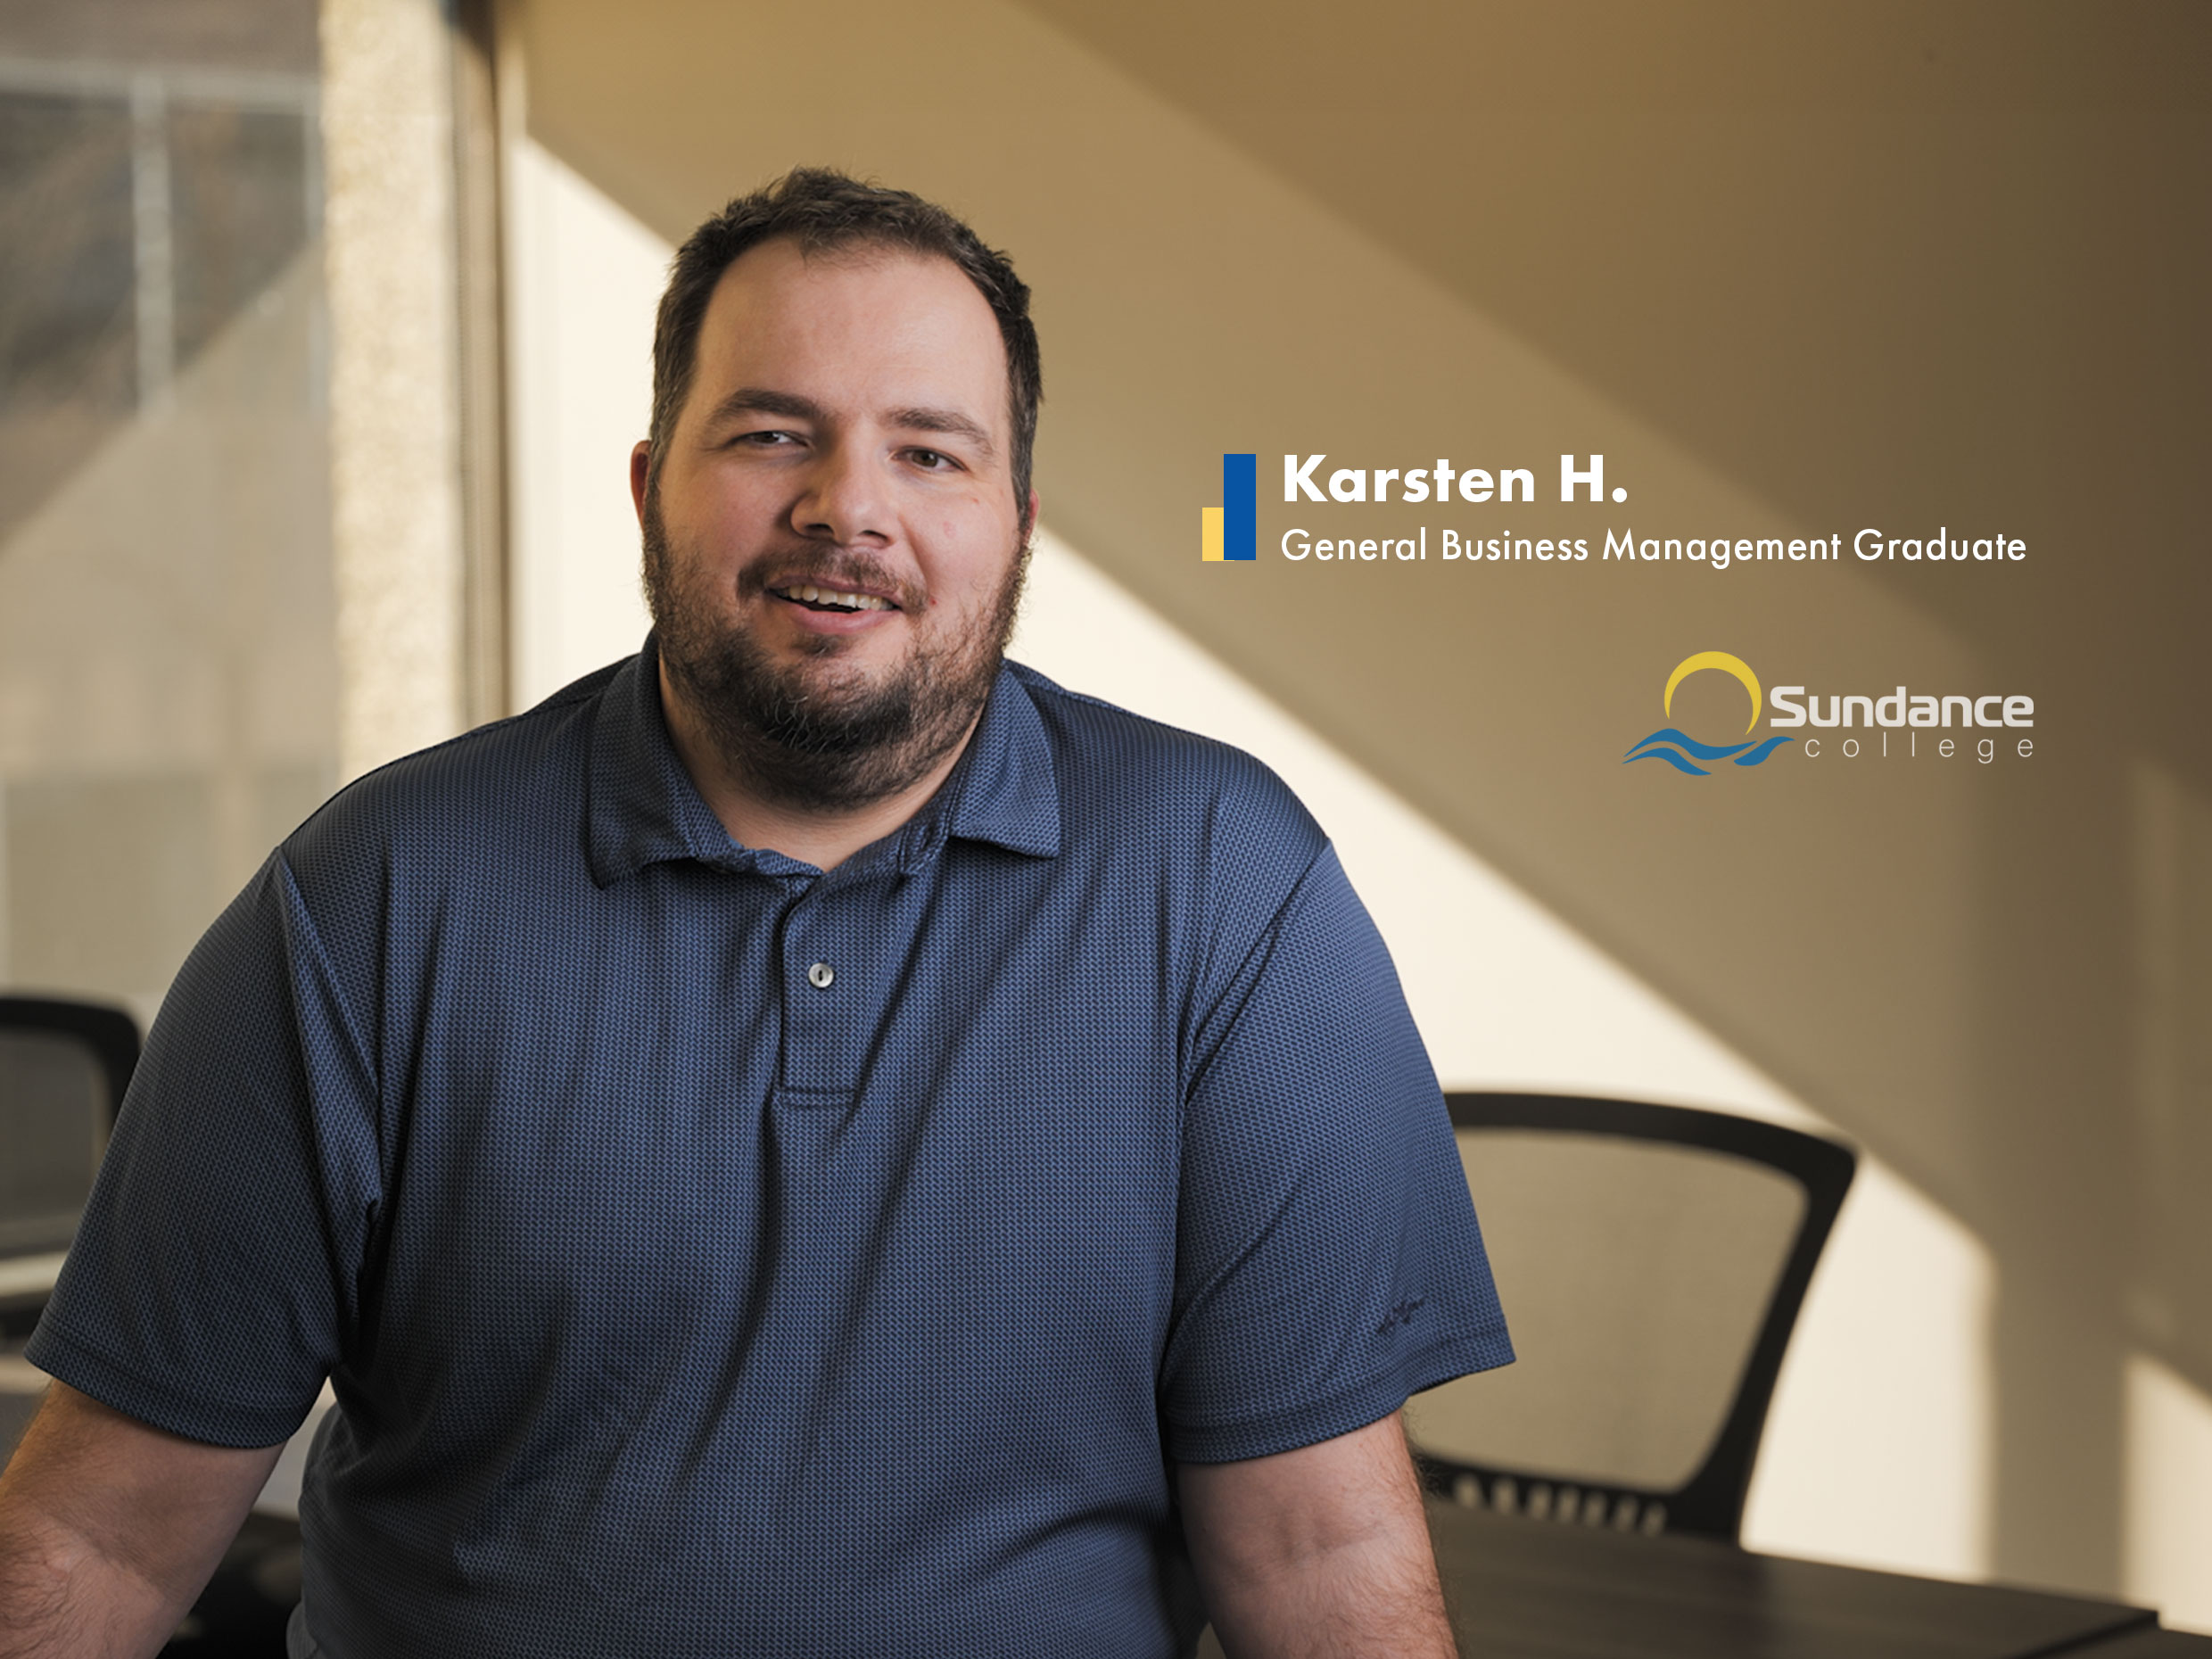 Kartsen H., a General Business Management graduate from Sundance College.